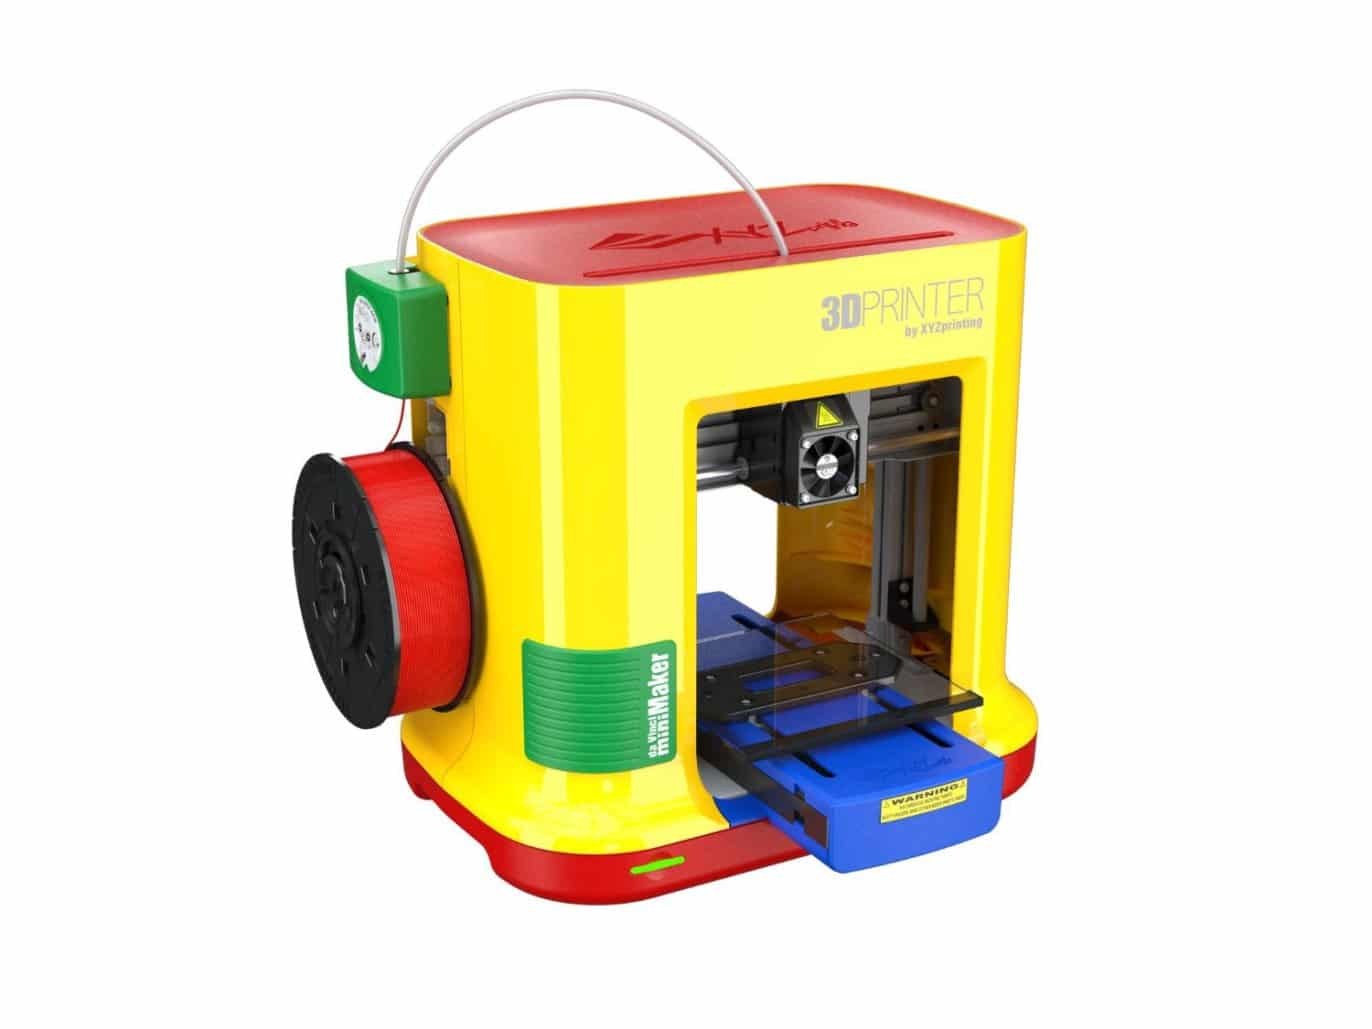 The da Vinci miniMaker 3D printer from XYZ printing